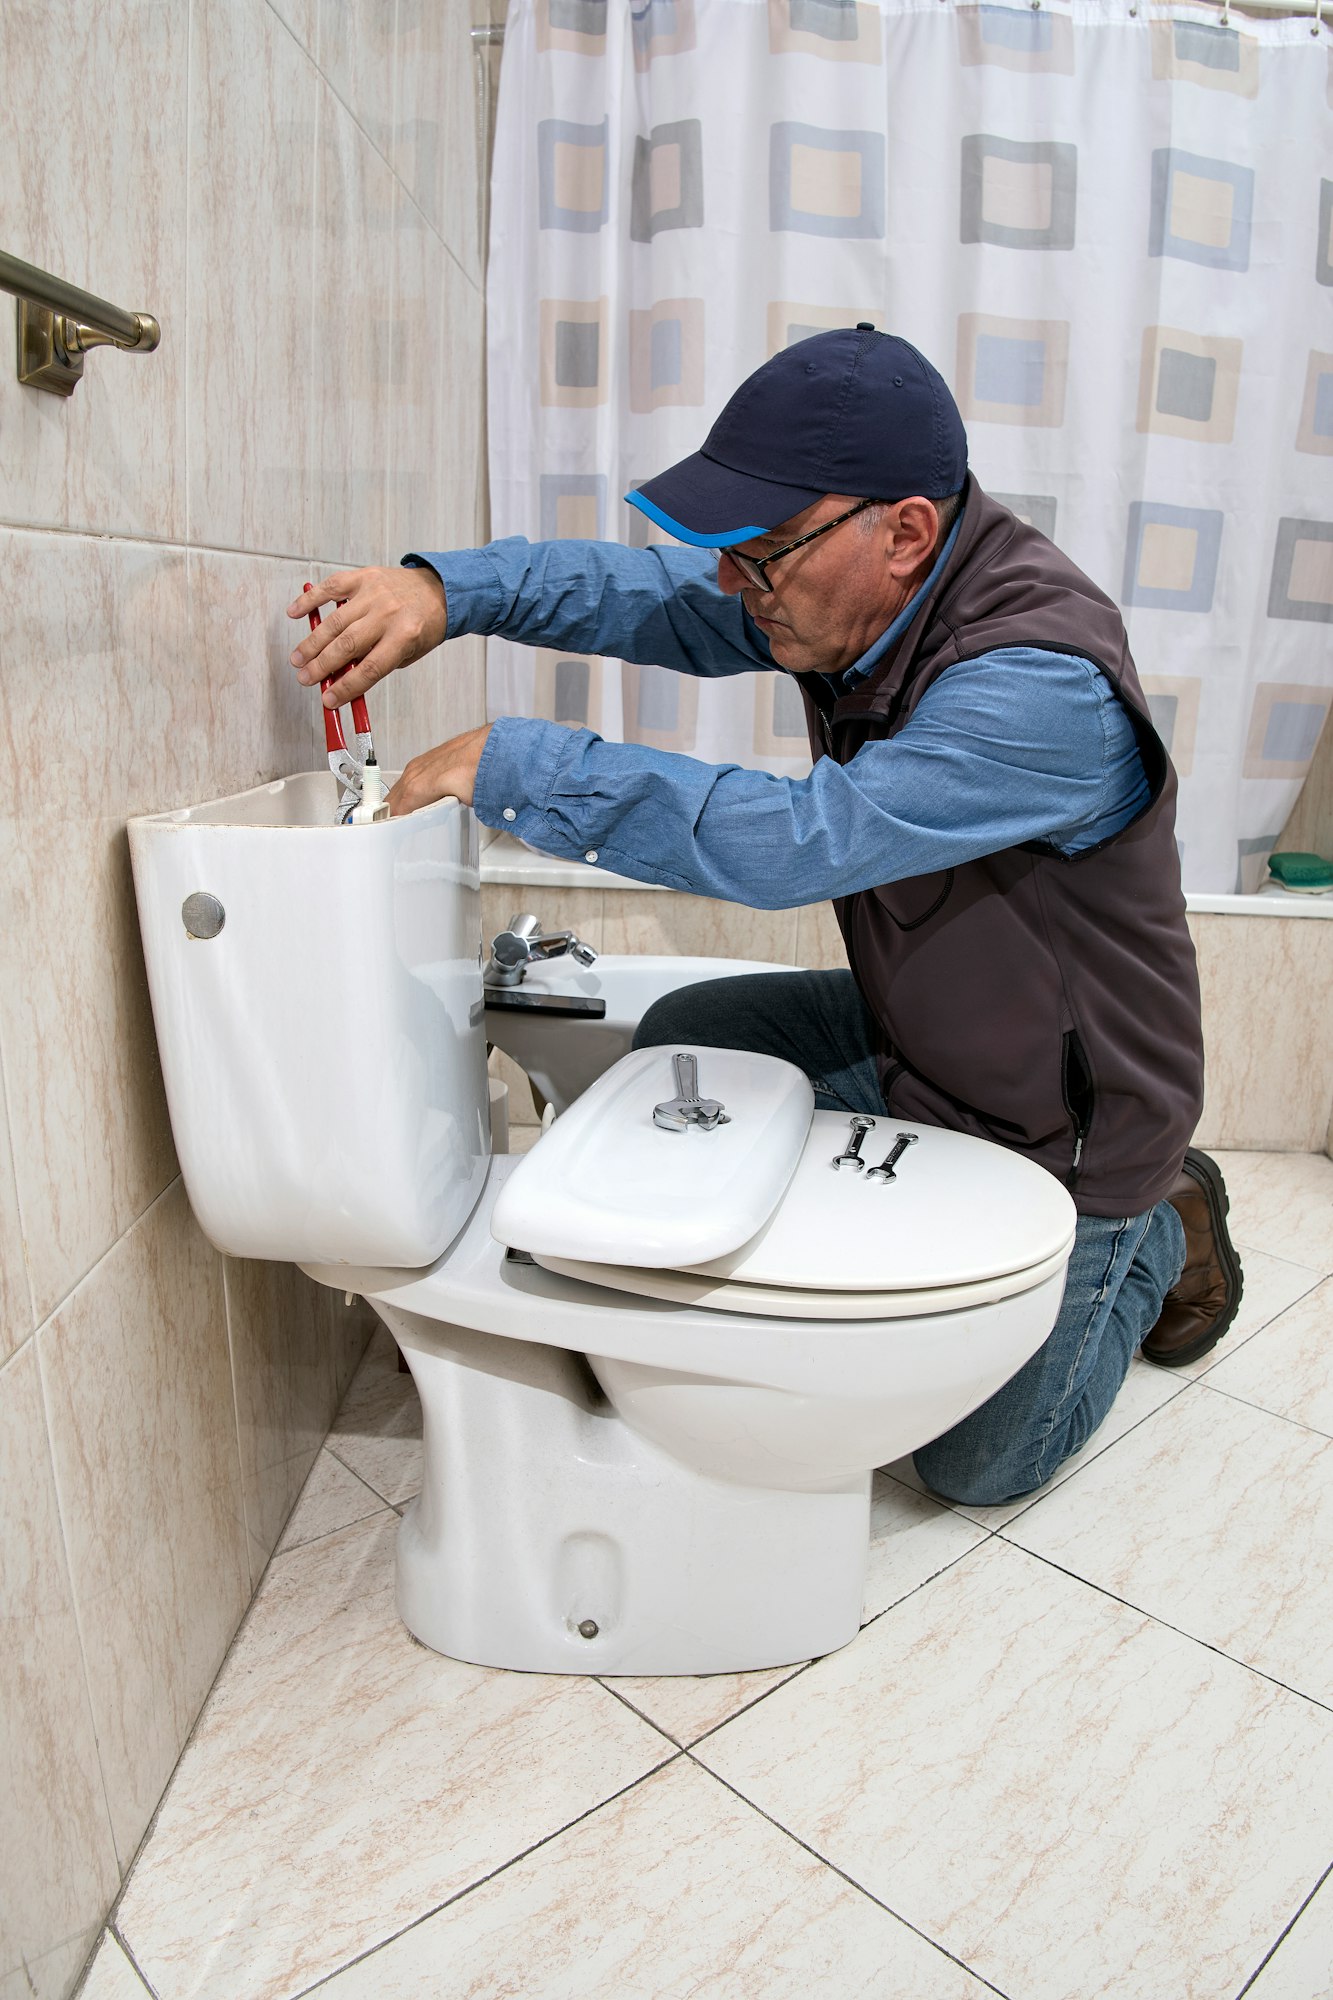 Plumber repairing a toilet cistern